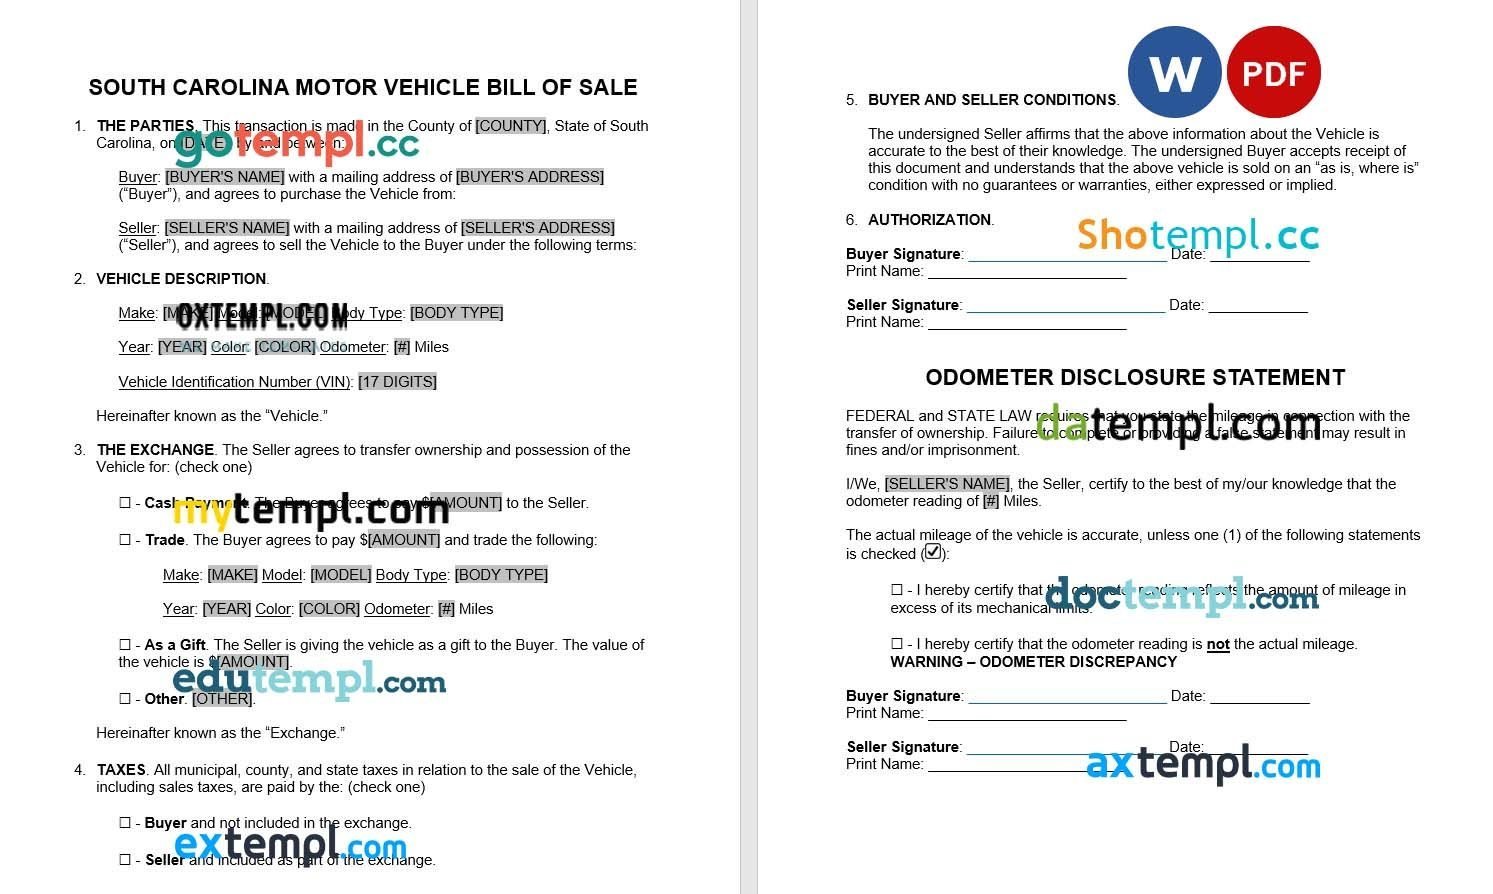 South Carolina Motor Vehicle Bill of Sale example, fully editable